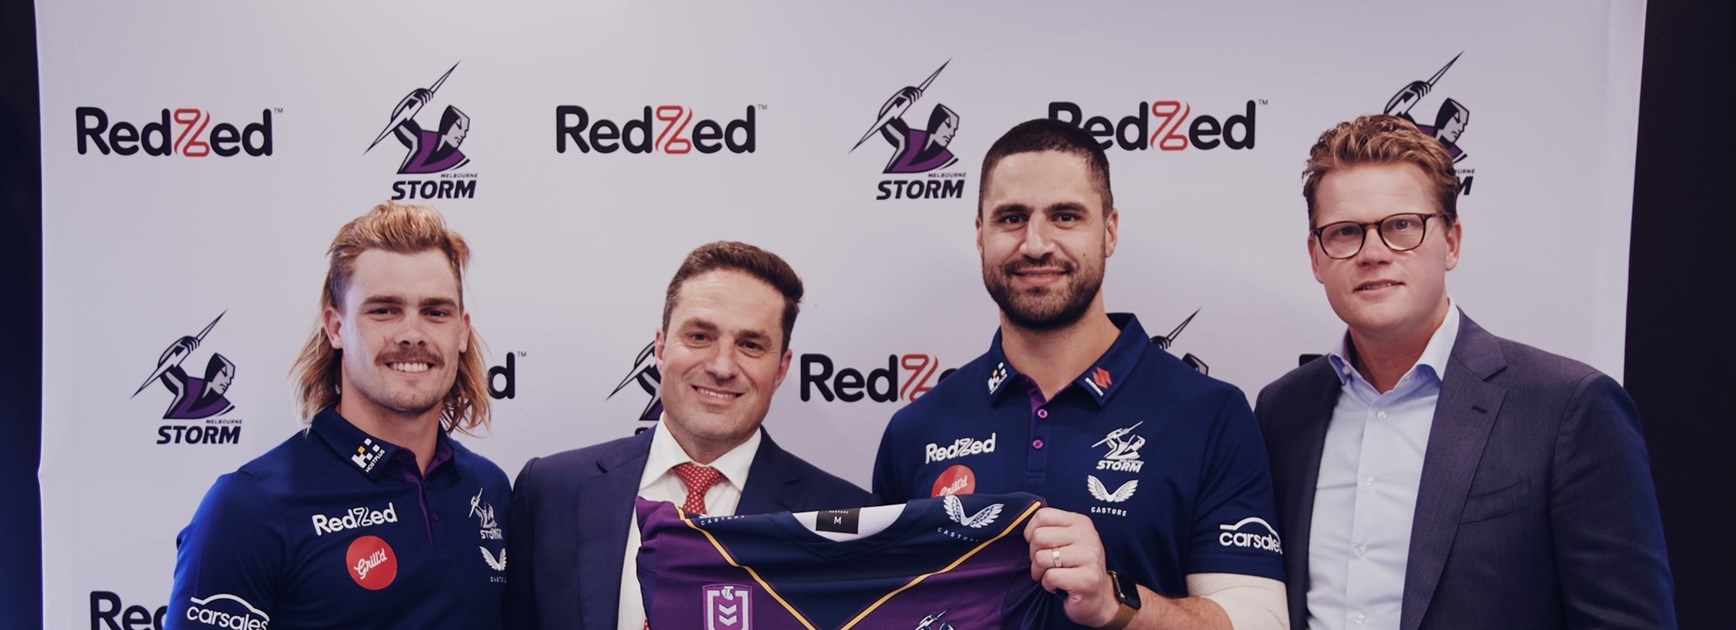 RedZed signs new deal as Storm’s major partner